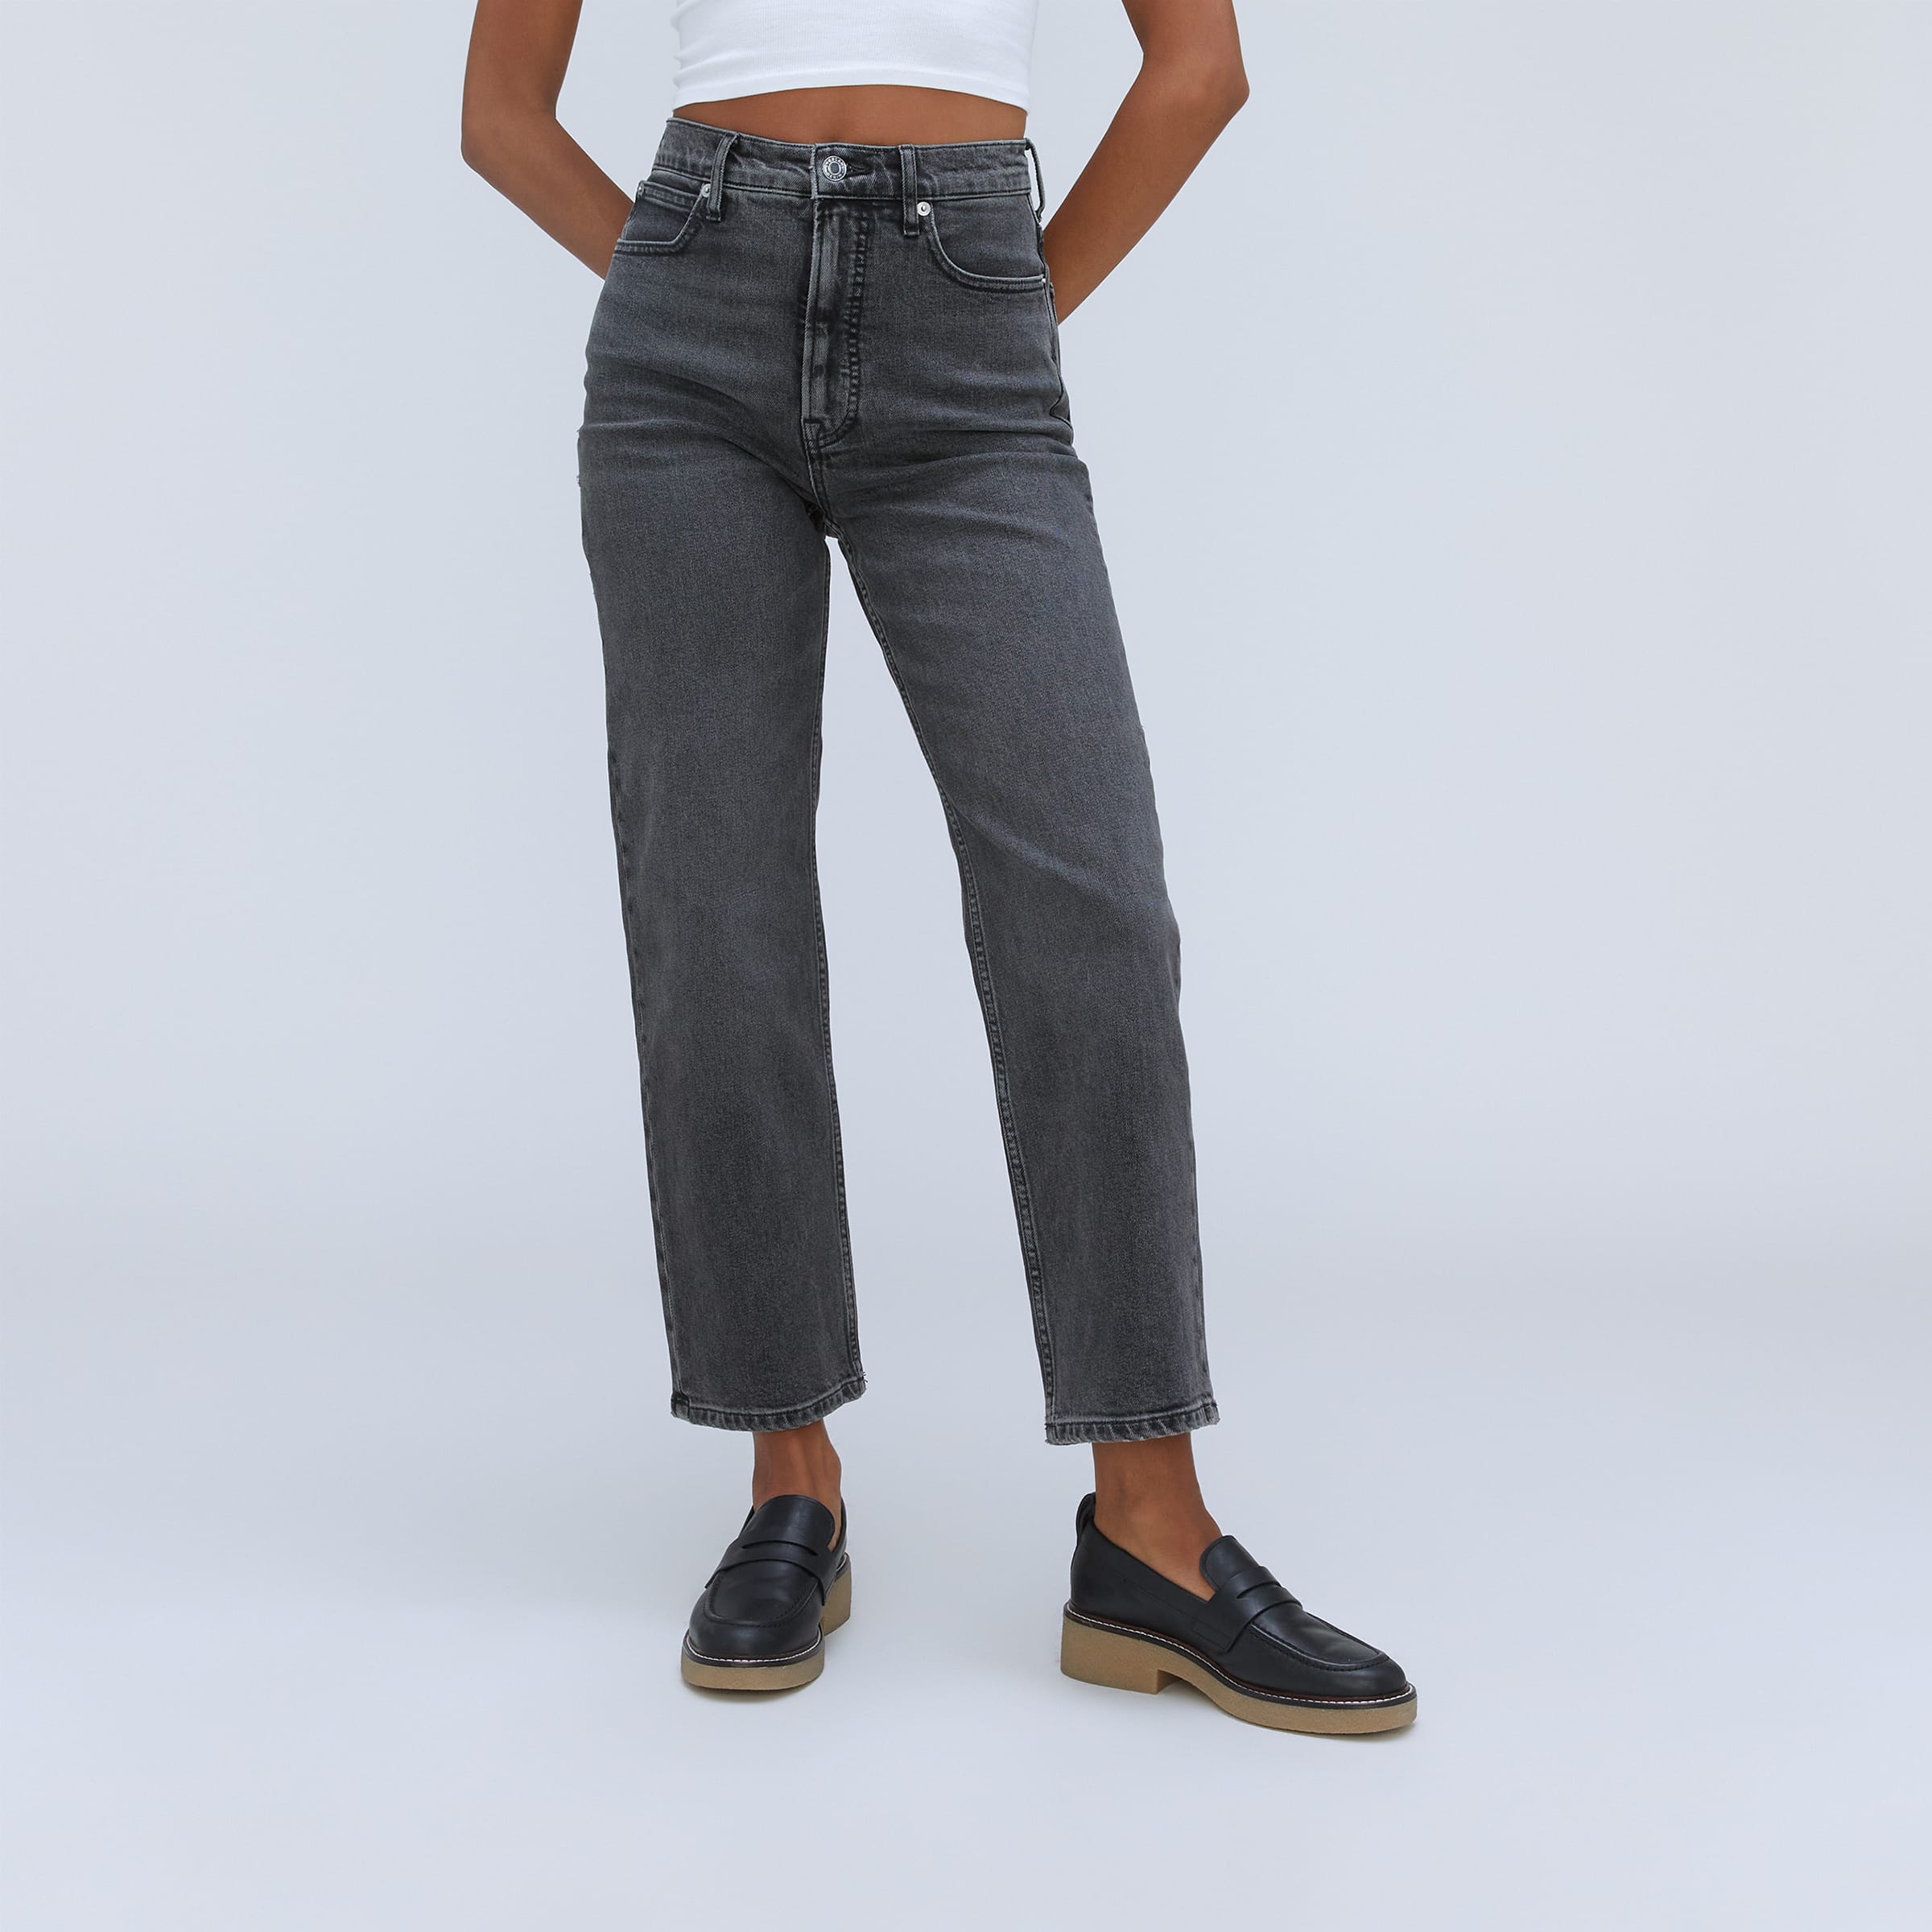 Style & Co Women's Curvy-Fit Skinny Jeans